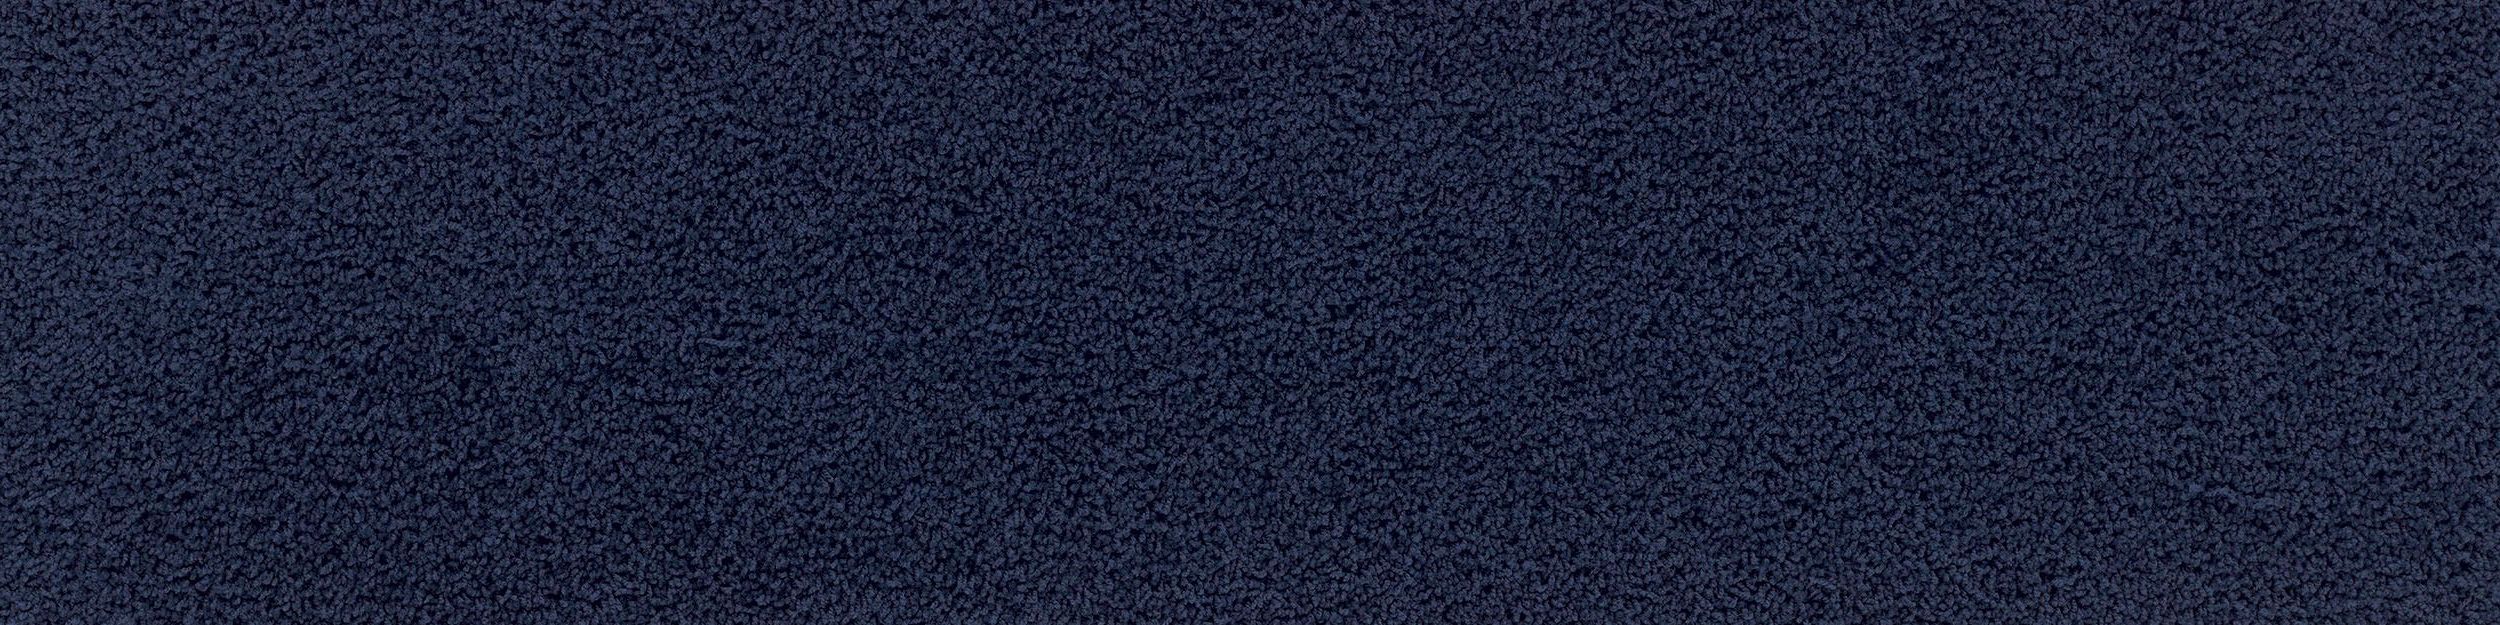 HN830 Carpet Tile In Cobalt afbeeldingnummer 2